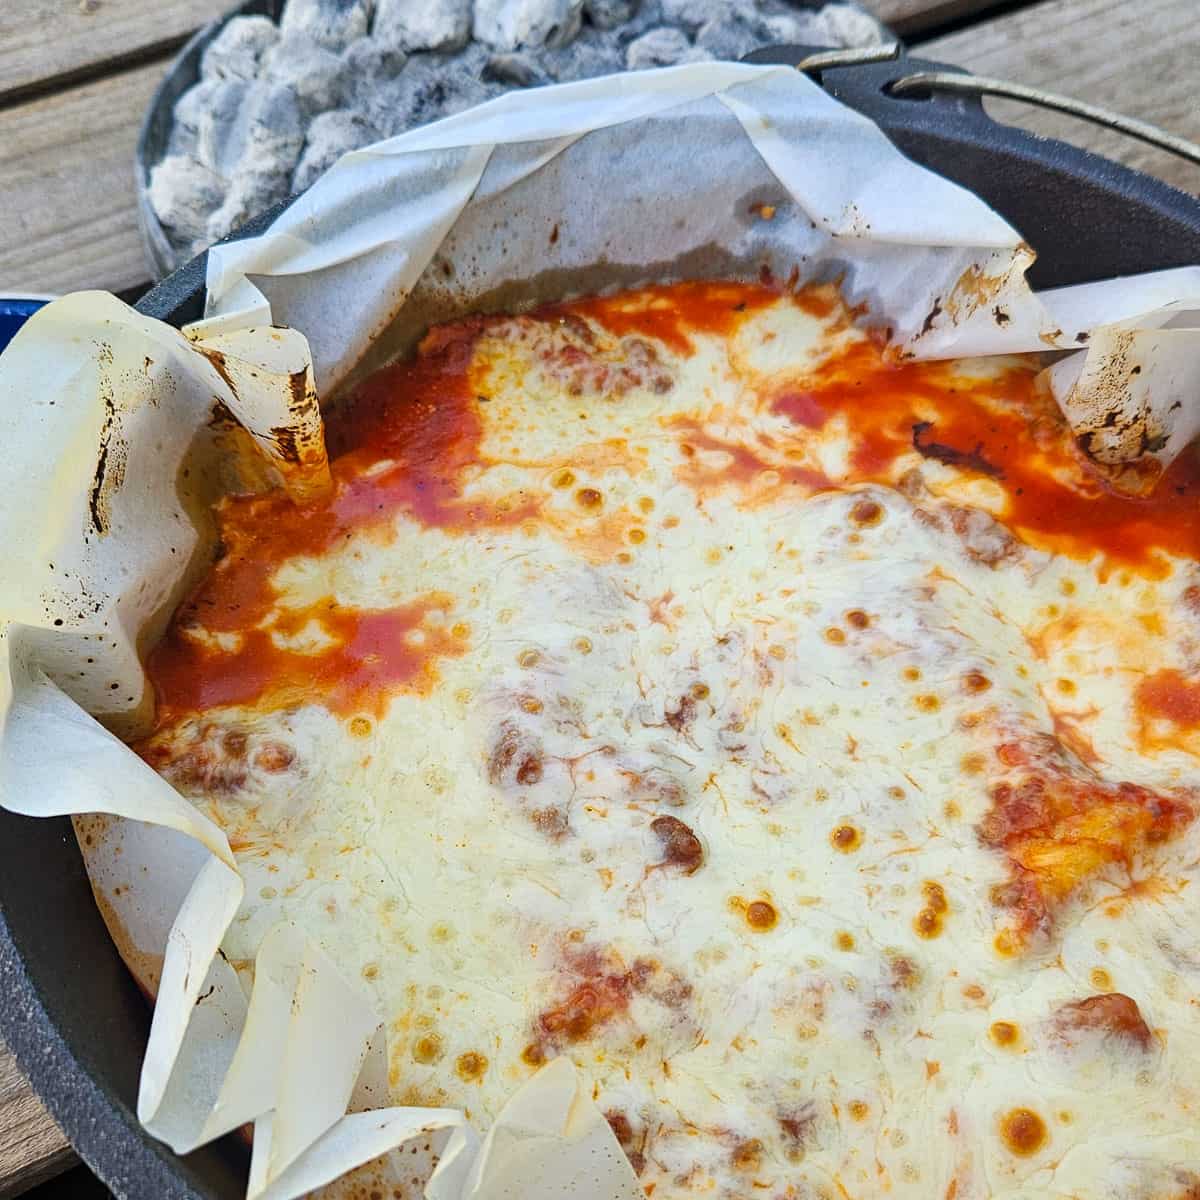 Delicious Dutch Oven Campfire Lasagna